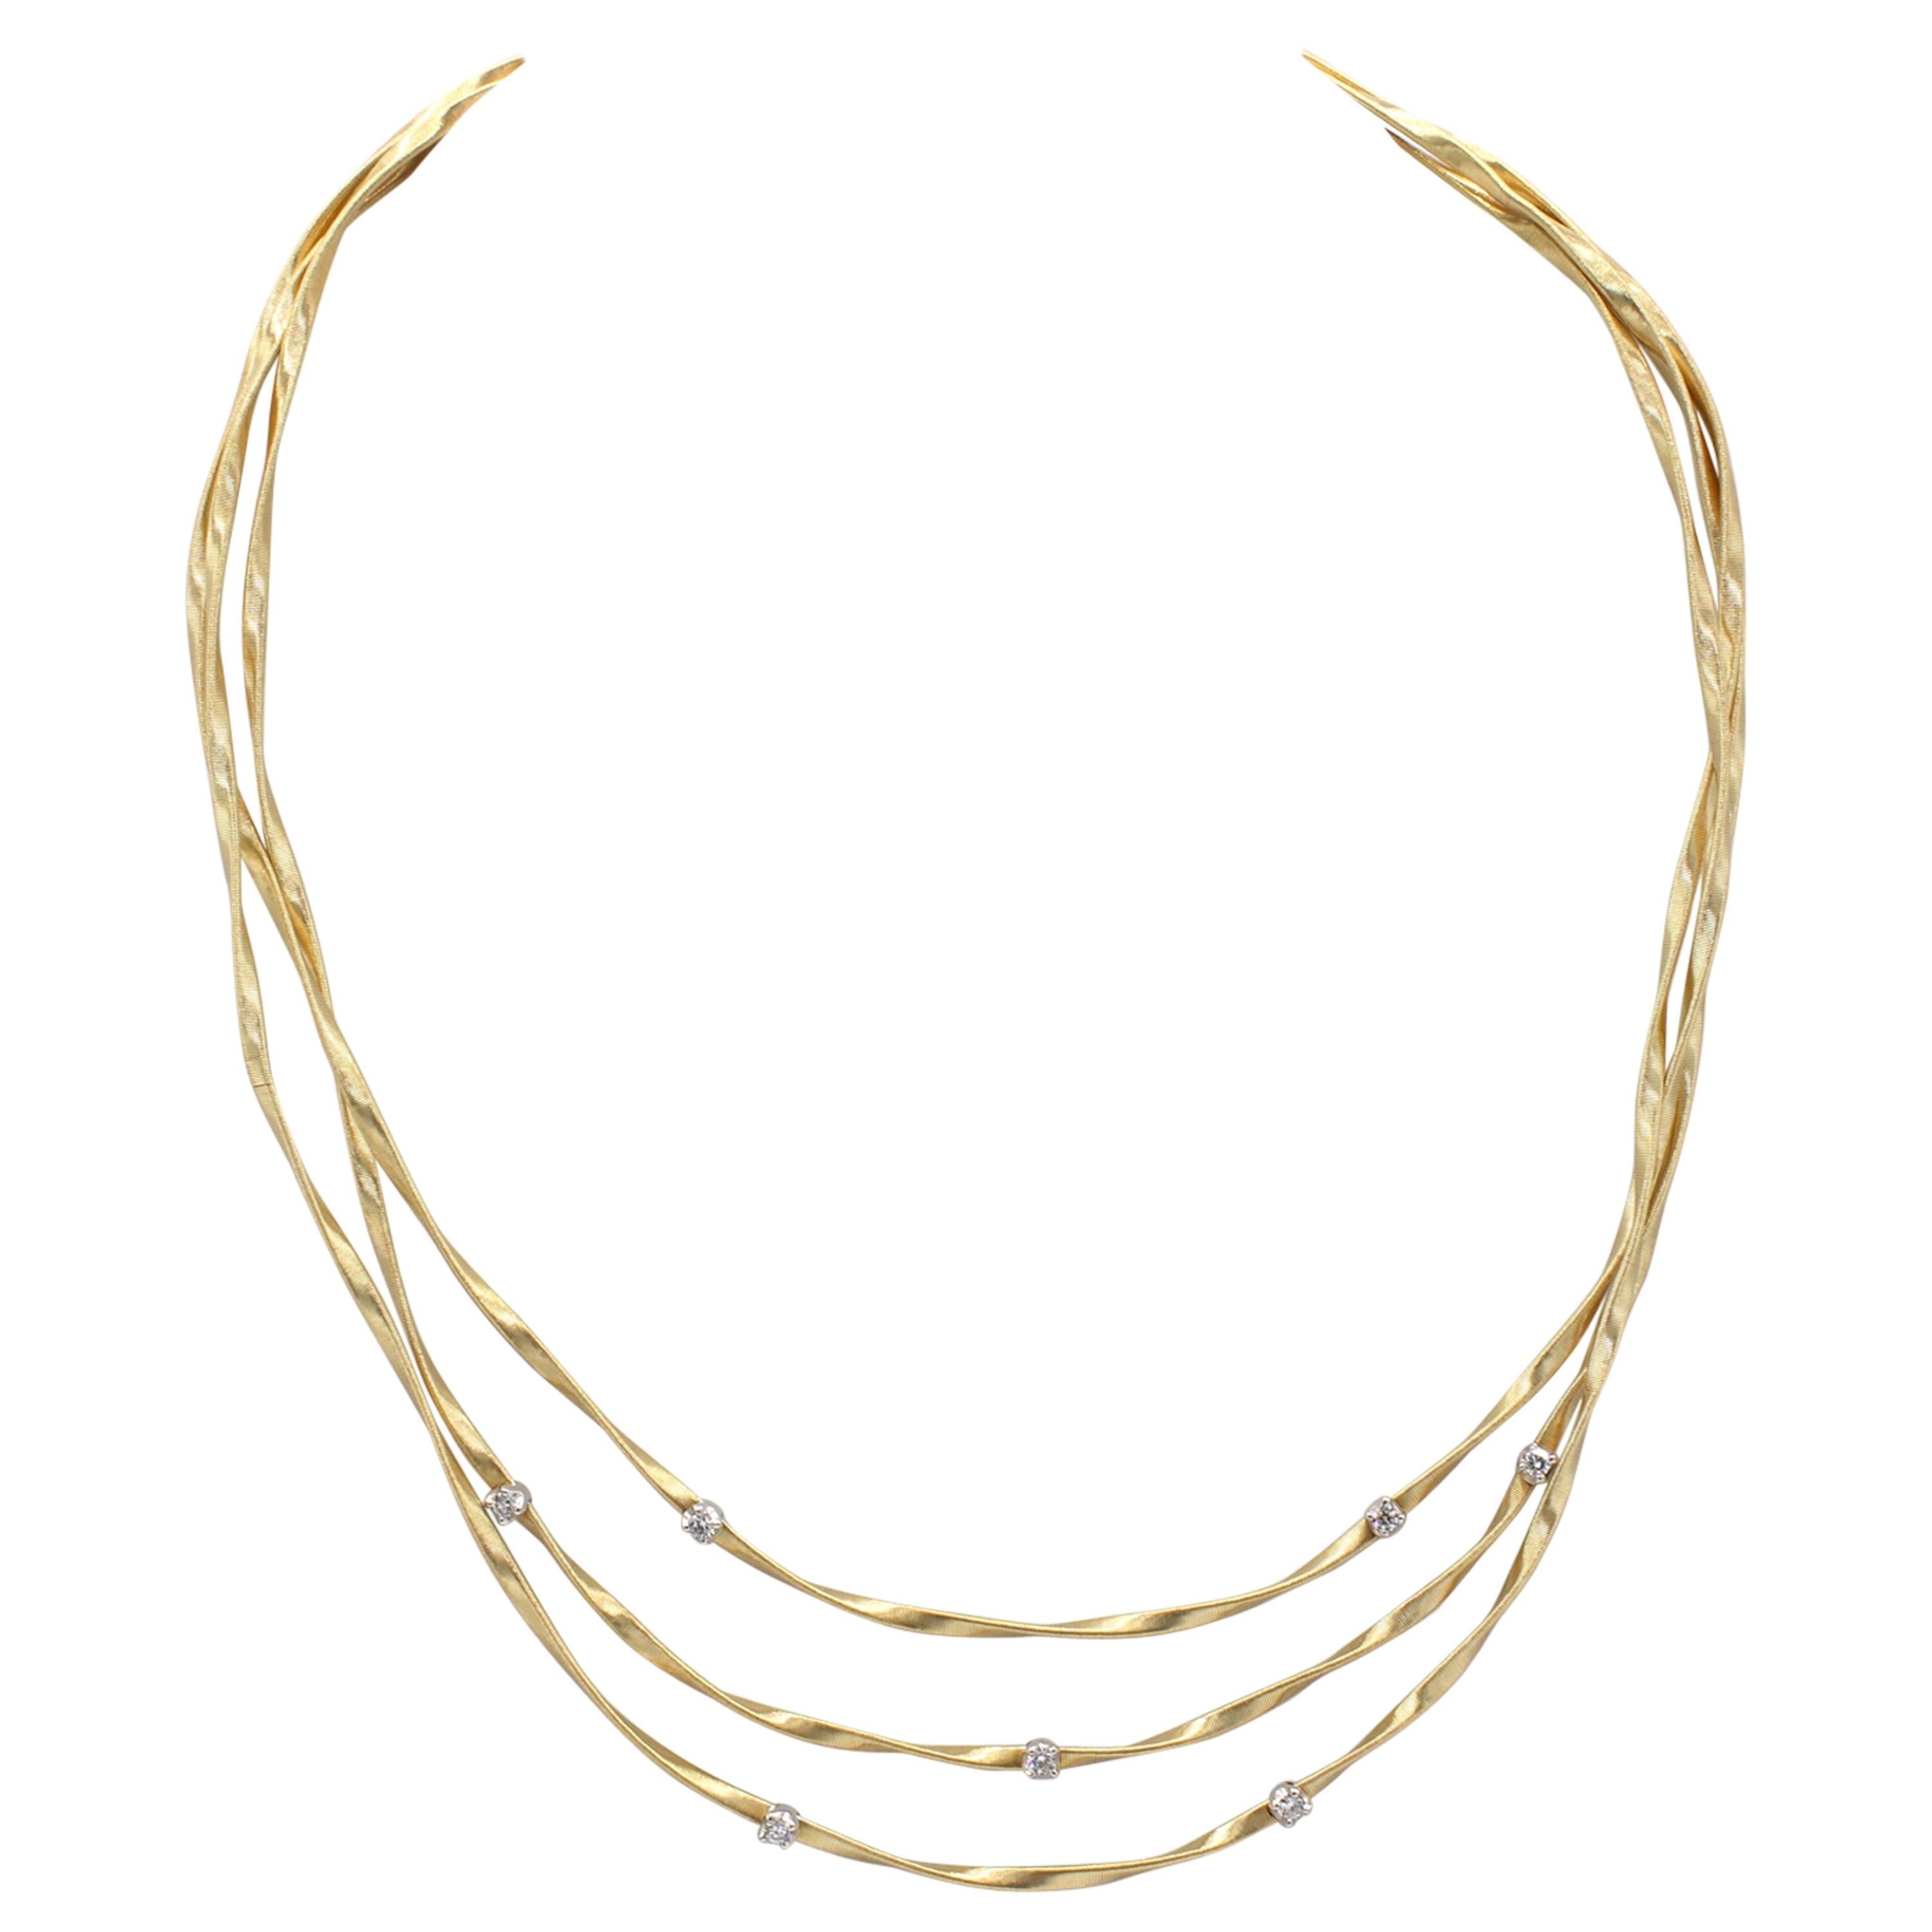 Marco Bicego Marrakech Collection 18 Karat Yellow Gold & Diamond 3 Row Necklace